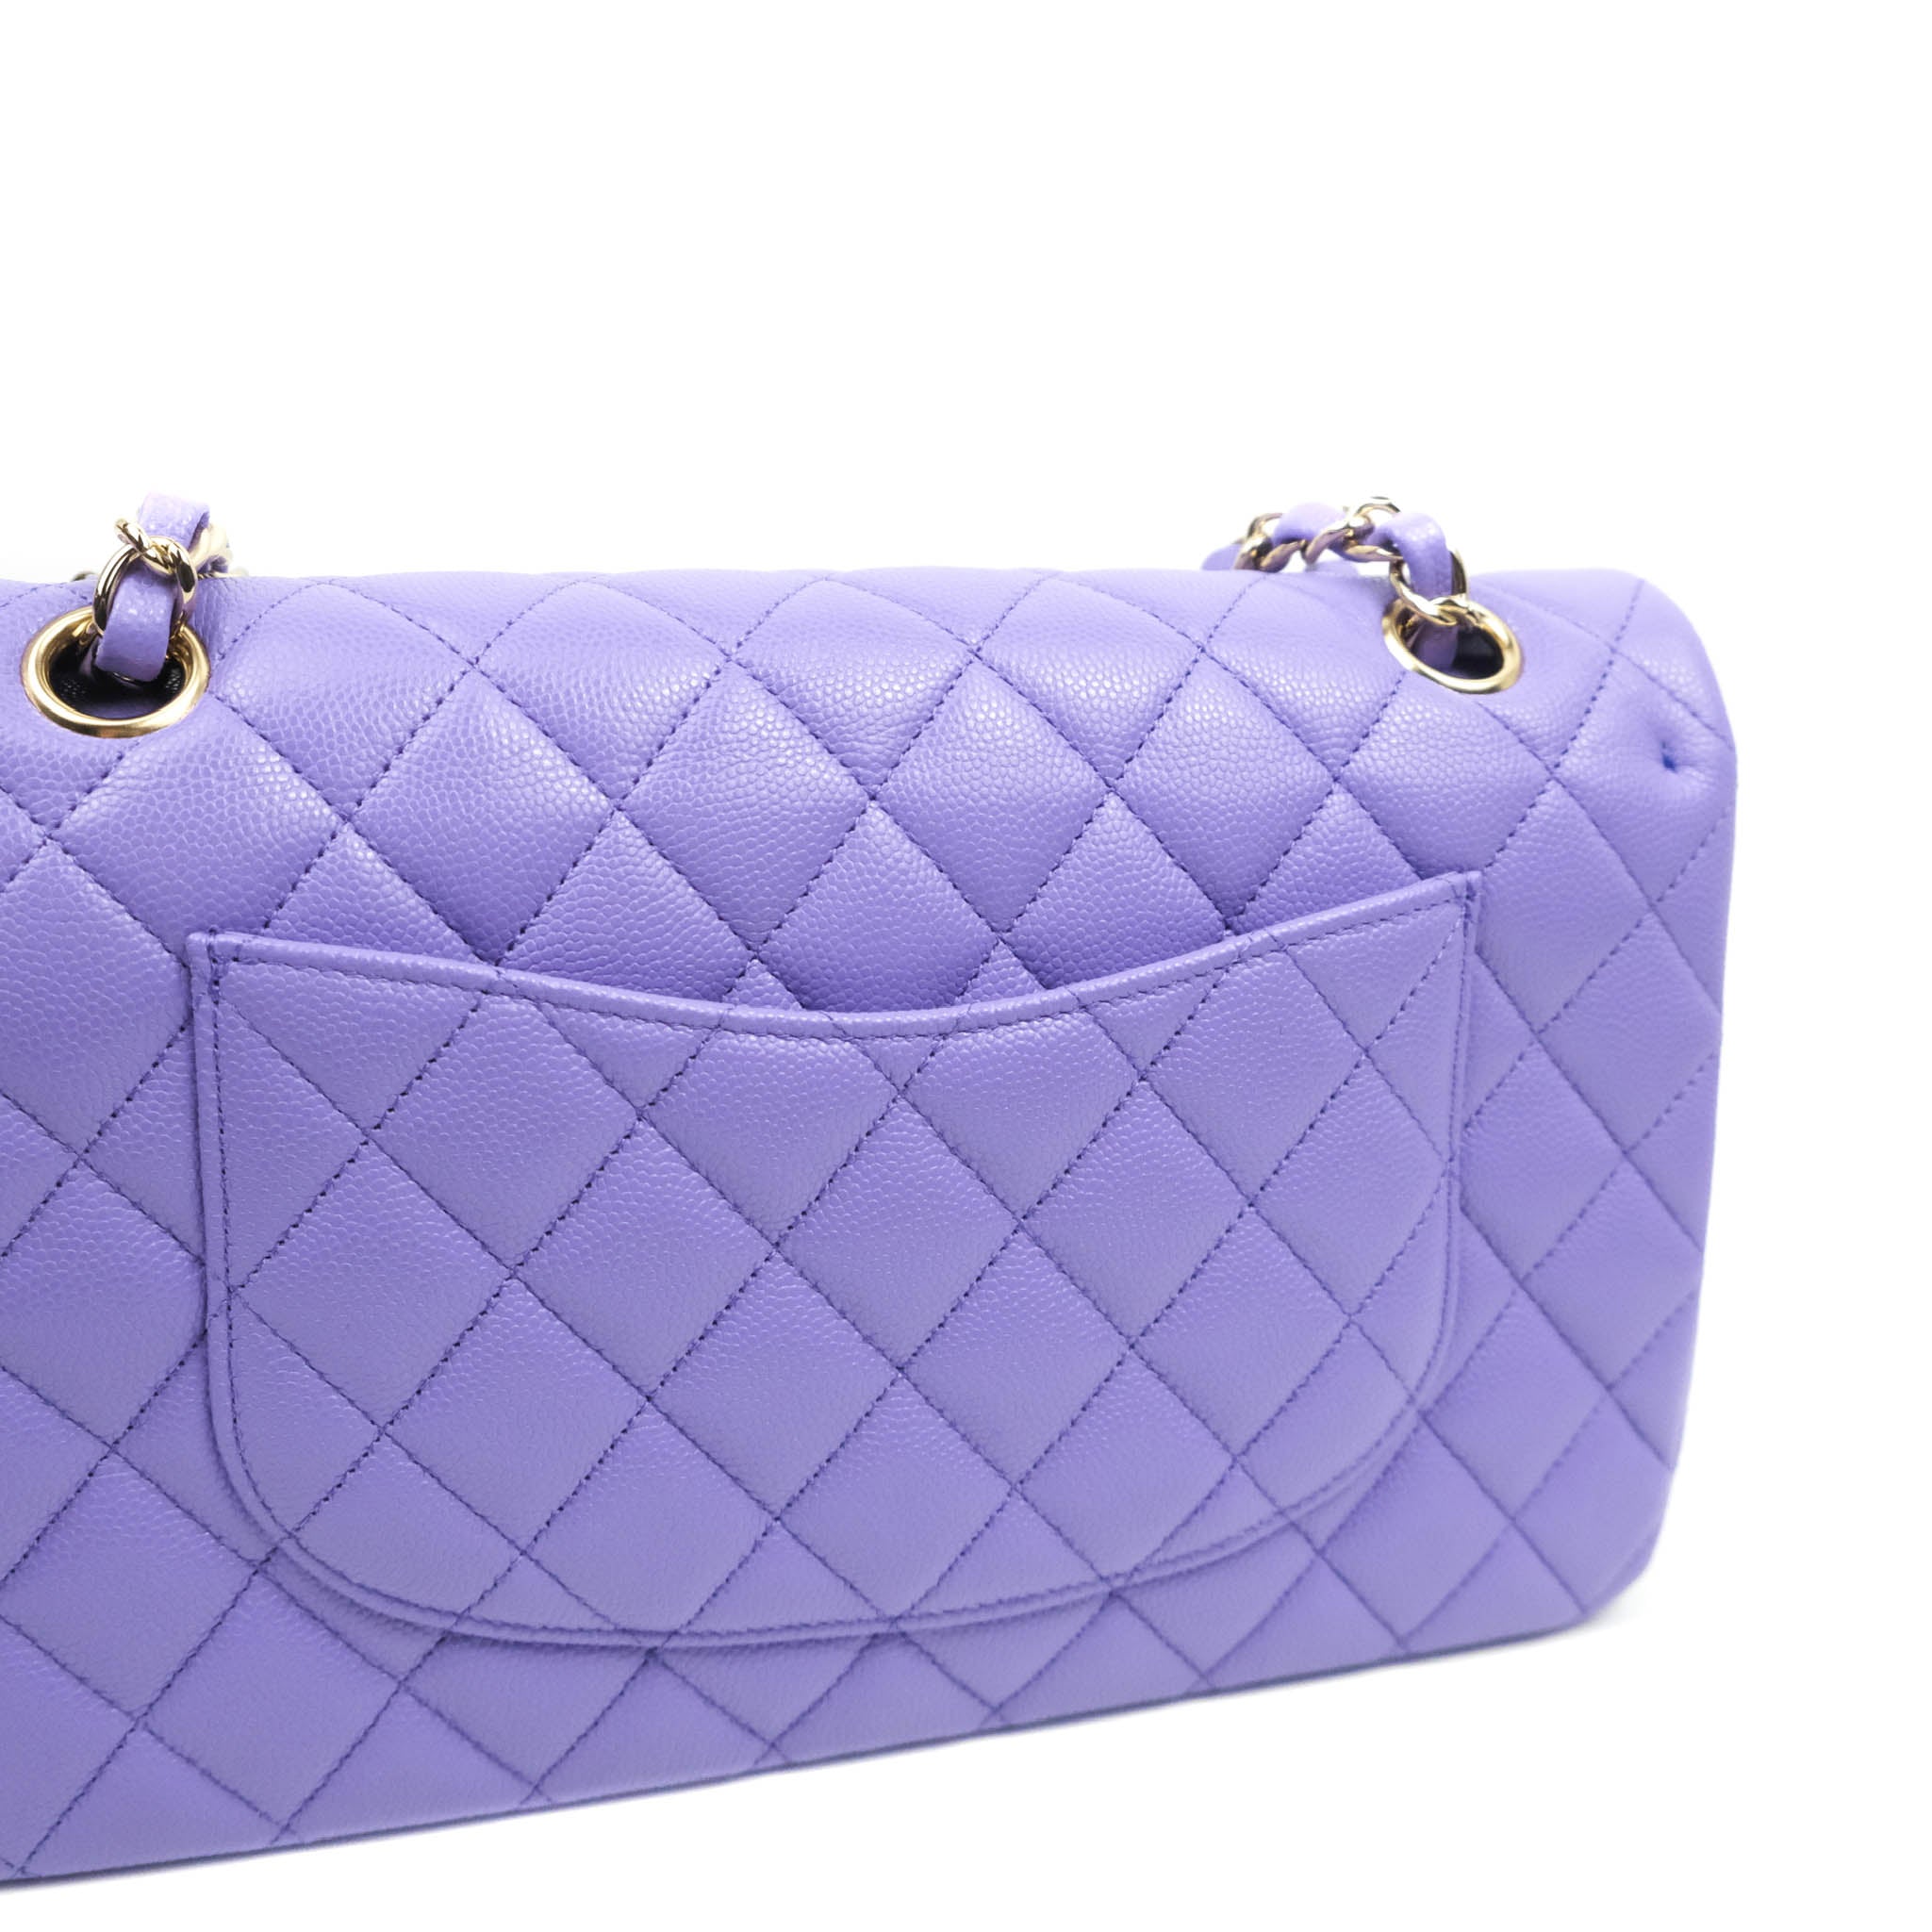 Chanel 22 Purple Medium